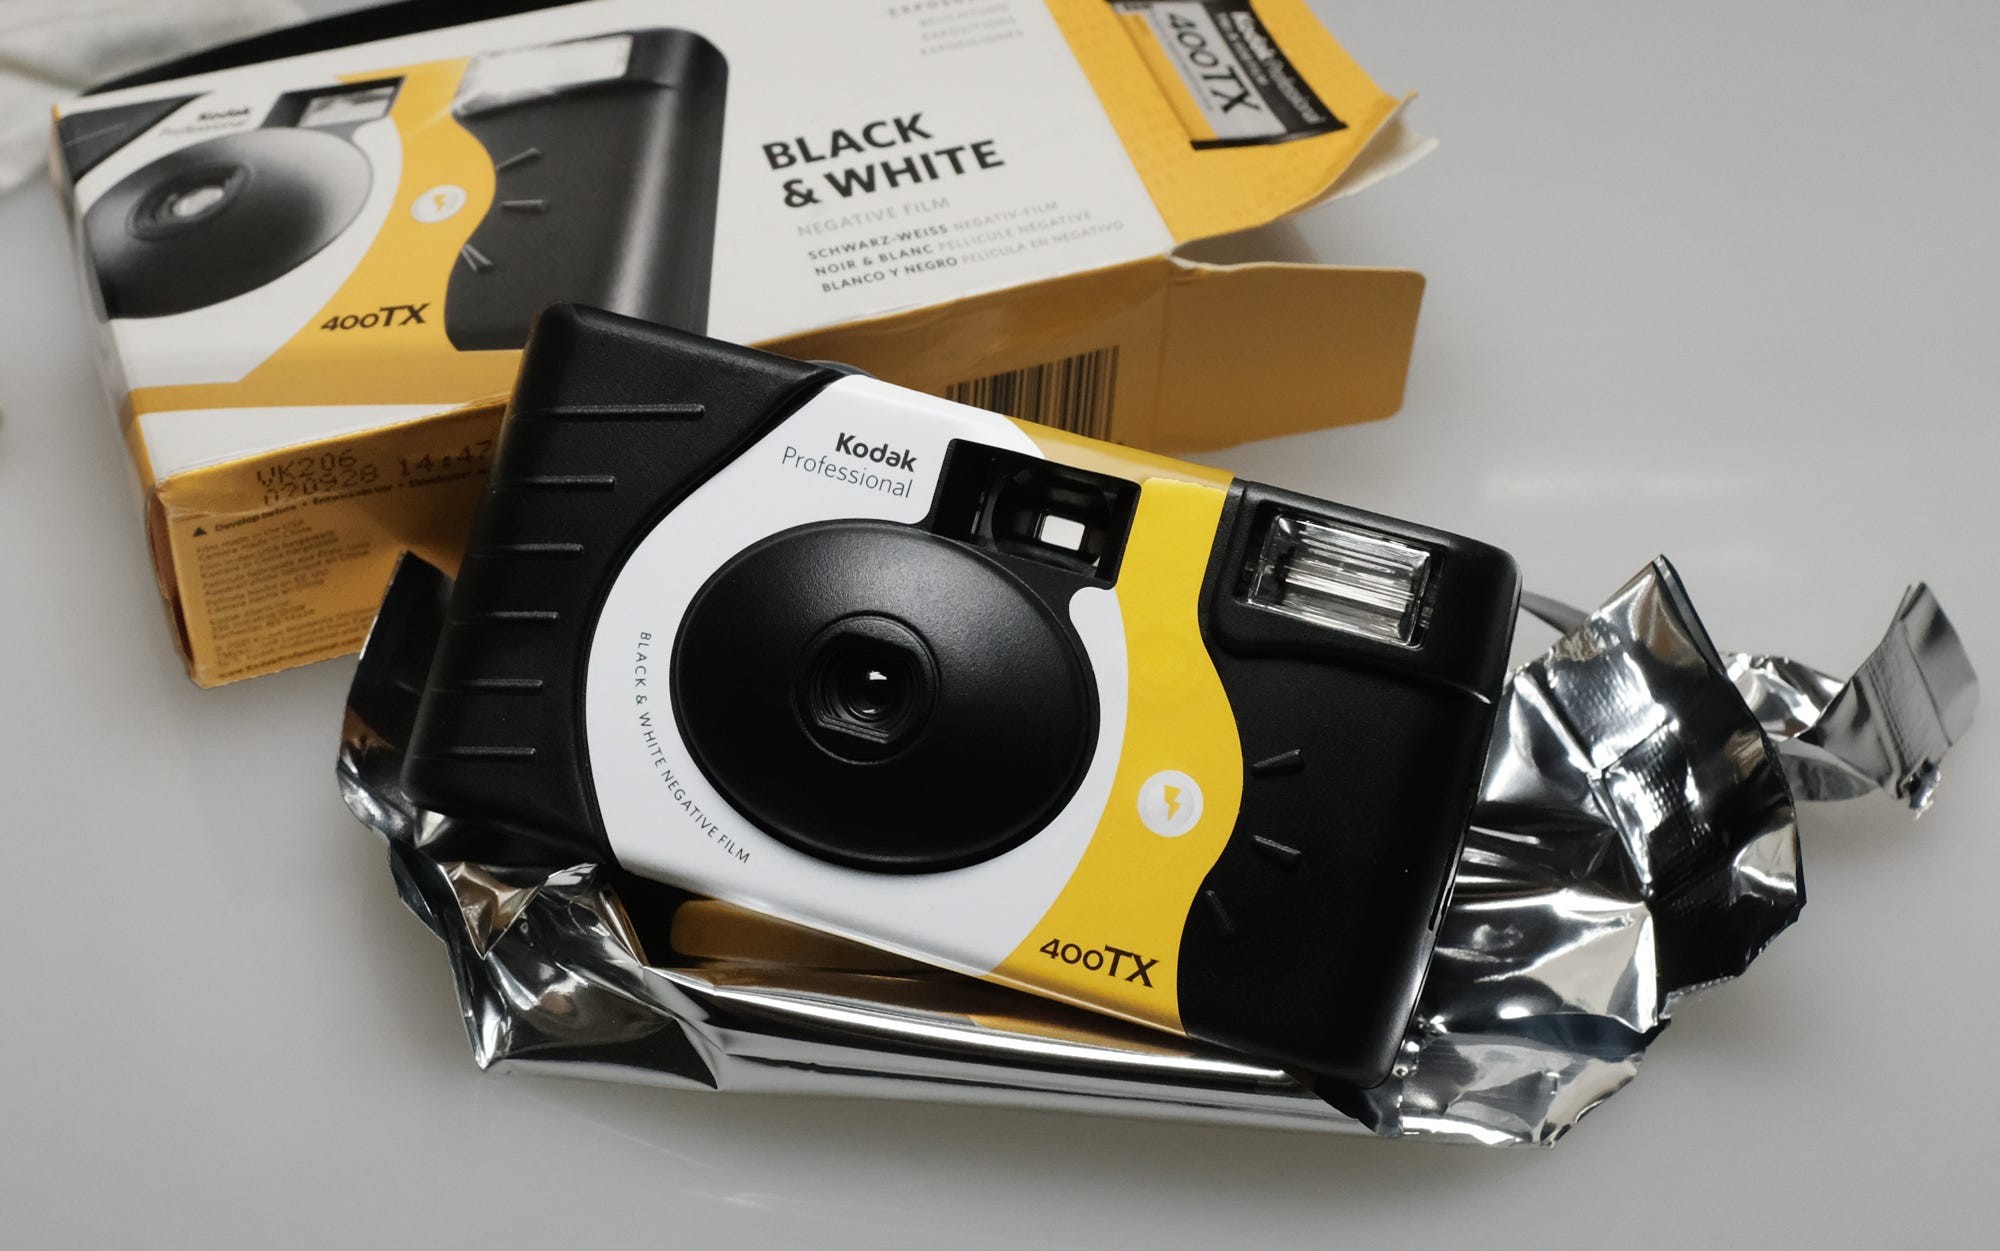 Process 043 ☼ Introducing the NEW Kodak Tri-X Disposable Camera!